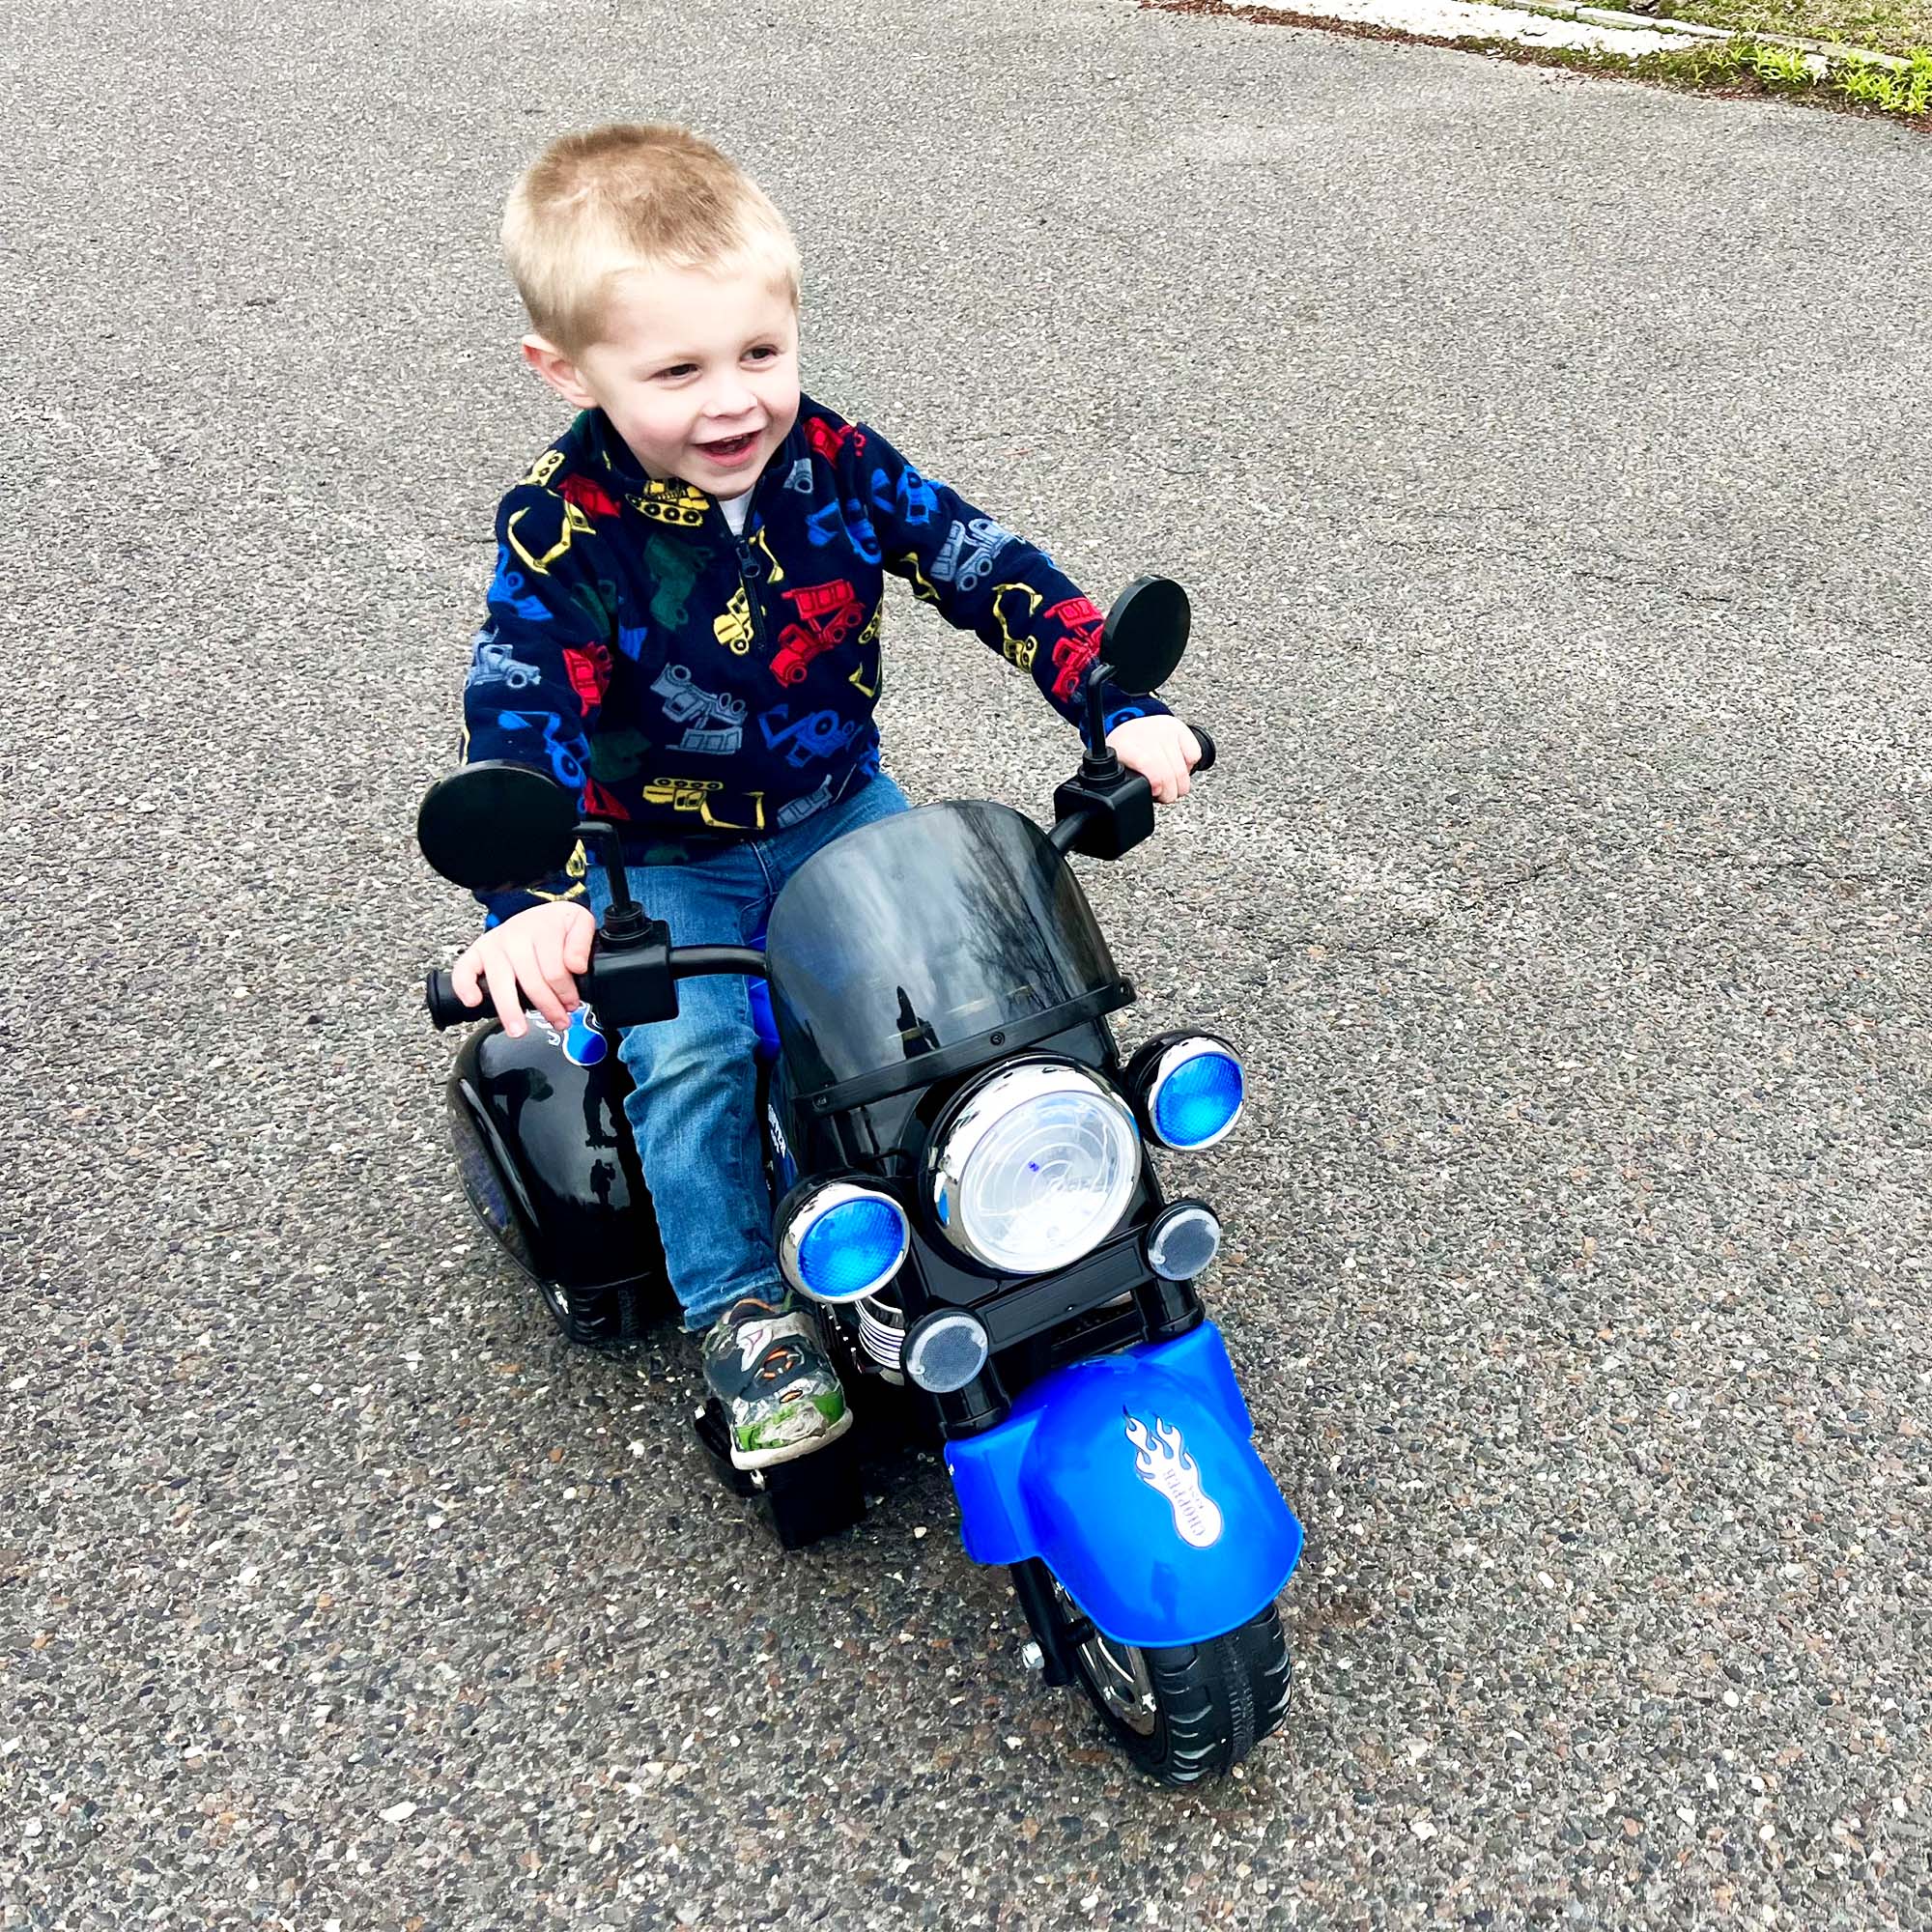 Blue ride on motorcycle kids